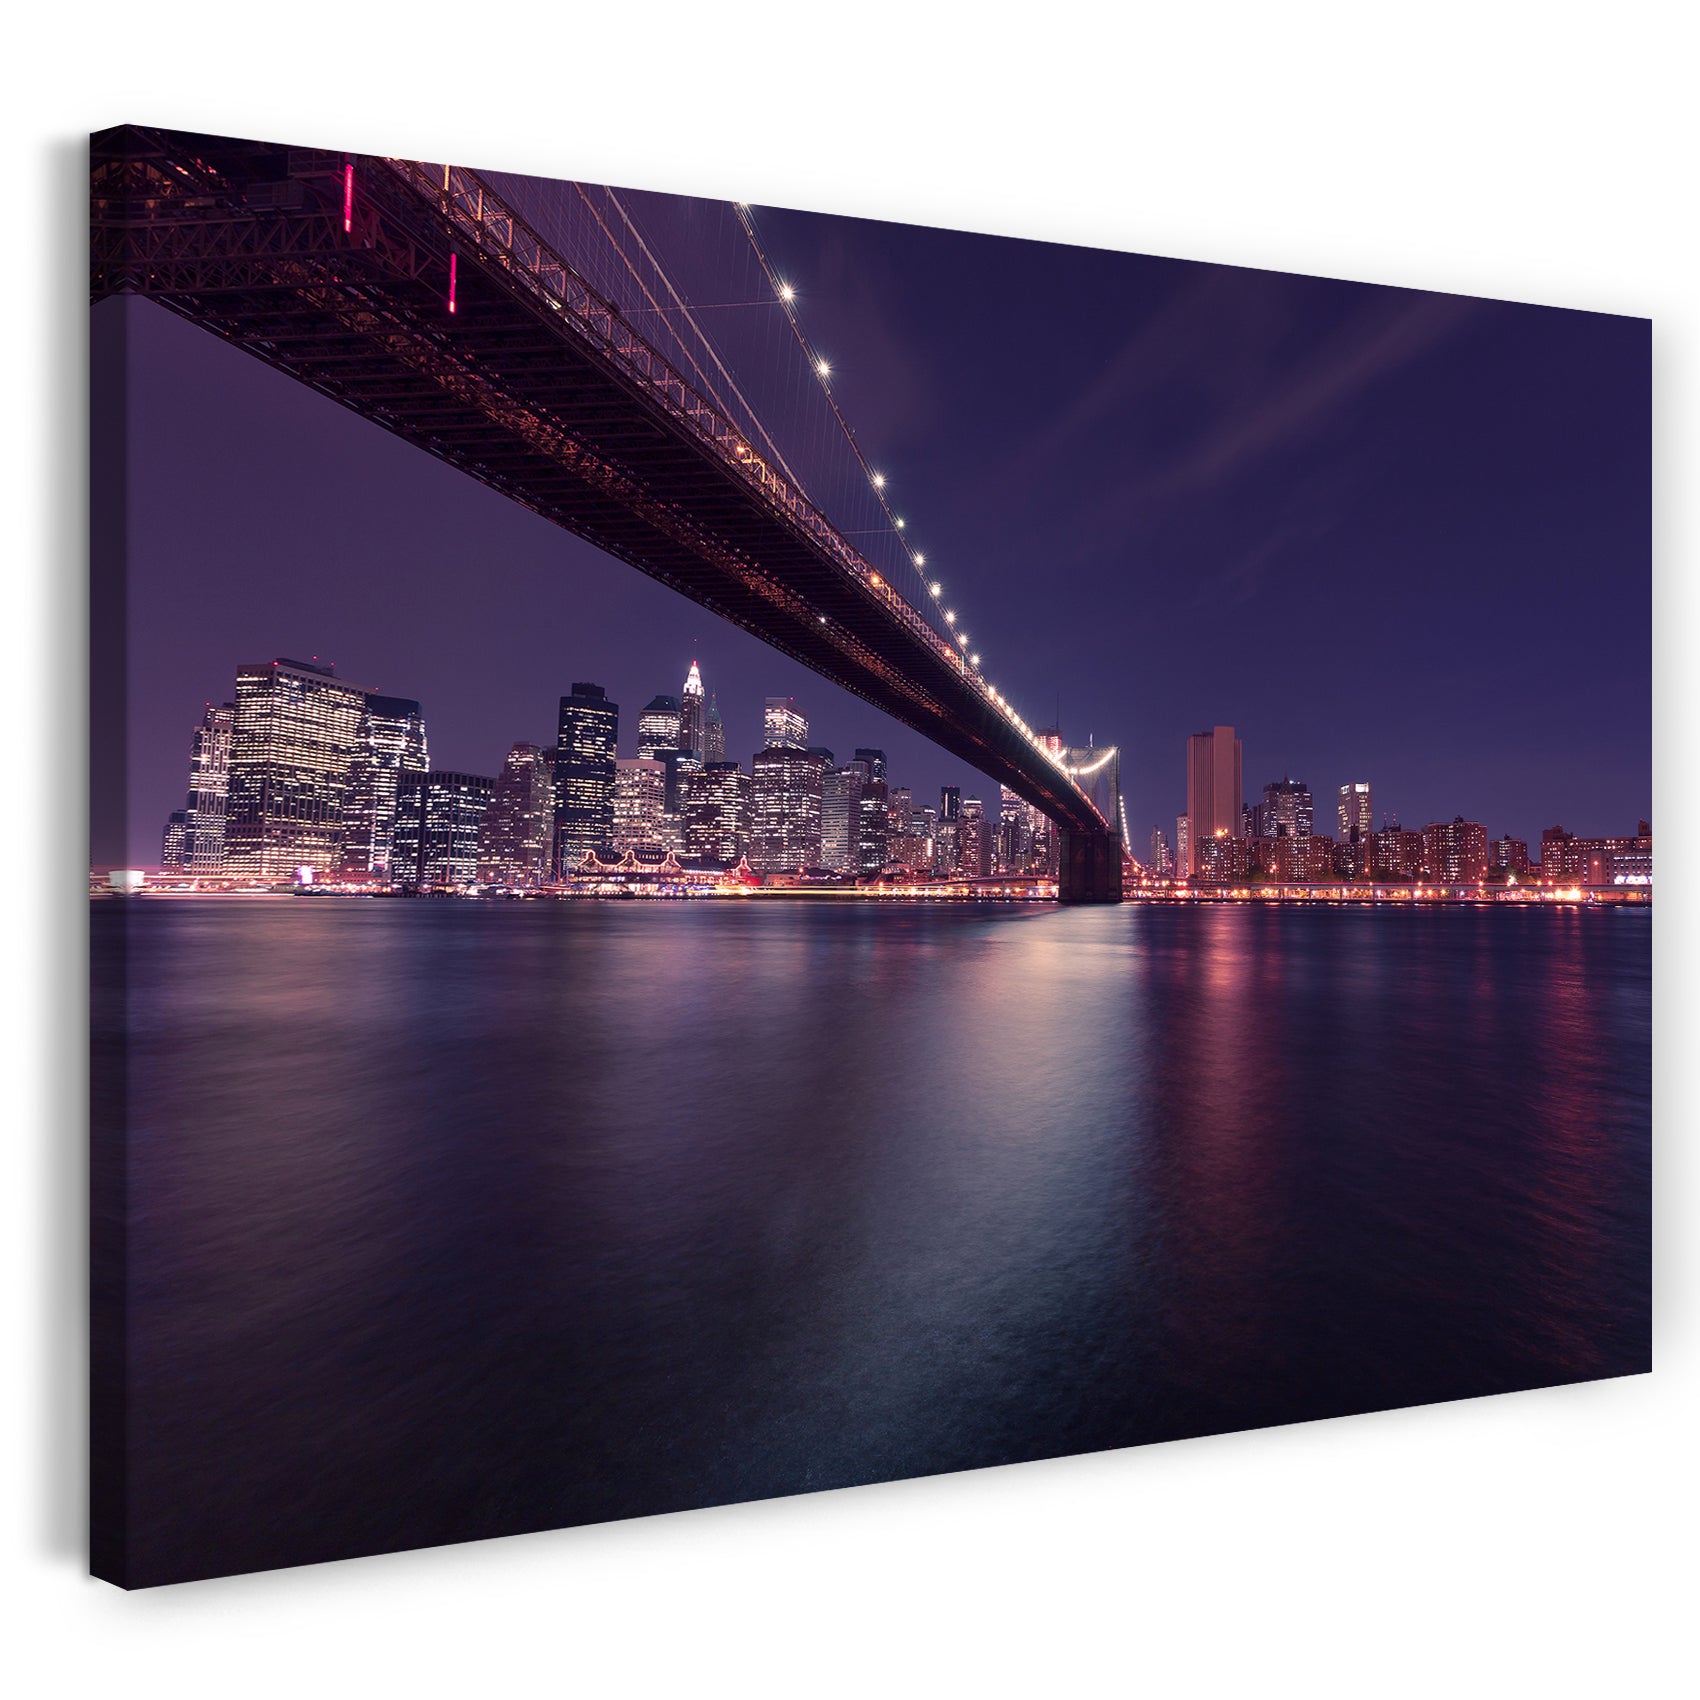 Leinwandbild Stadtebilder Skyline New York Nacht Bridge Brücke Meer night lights